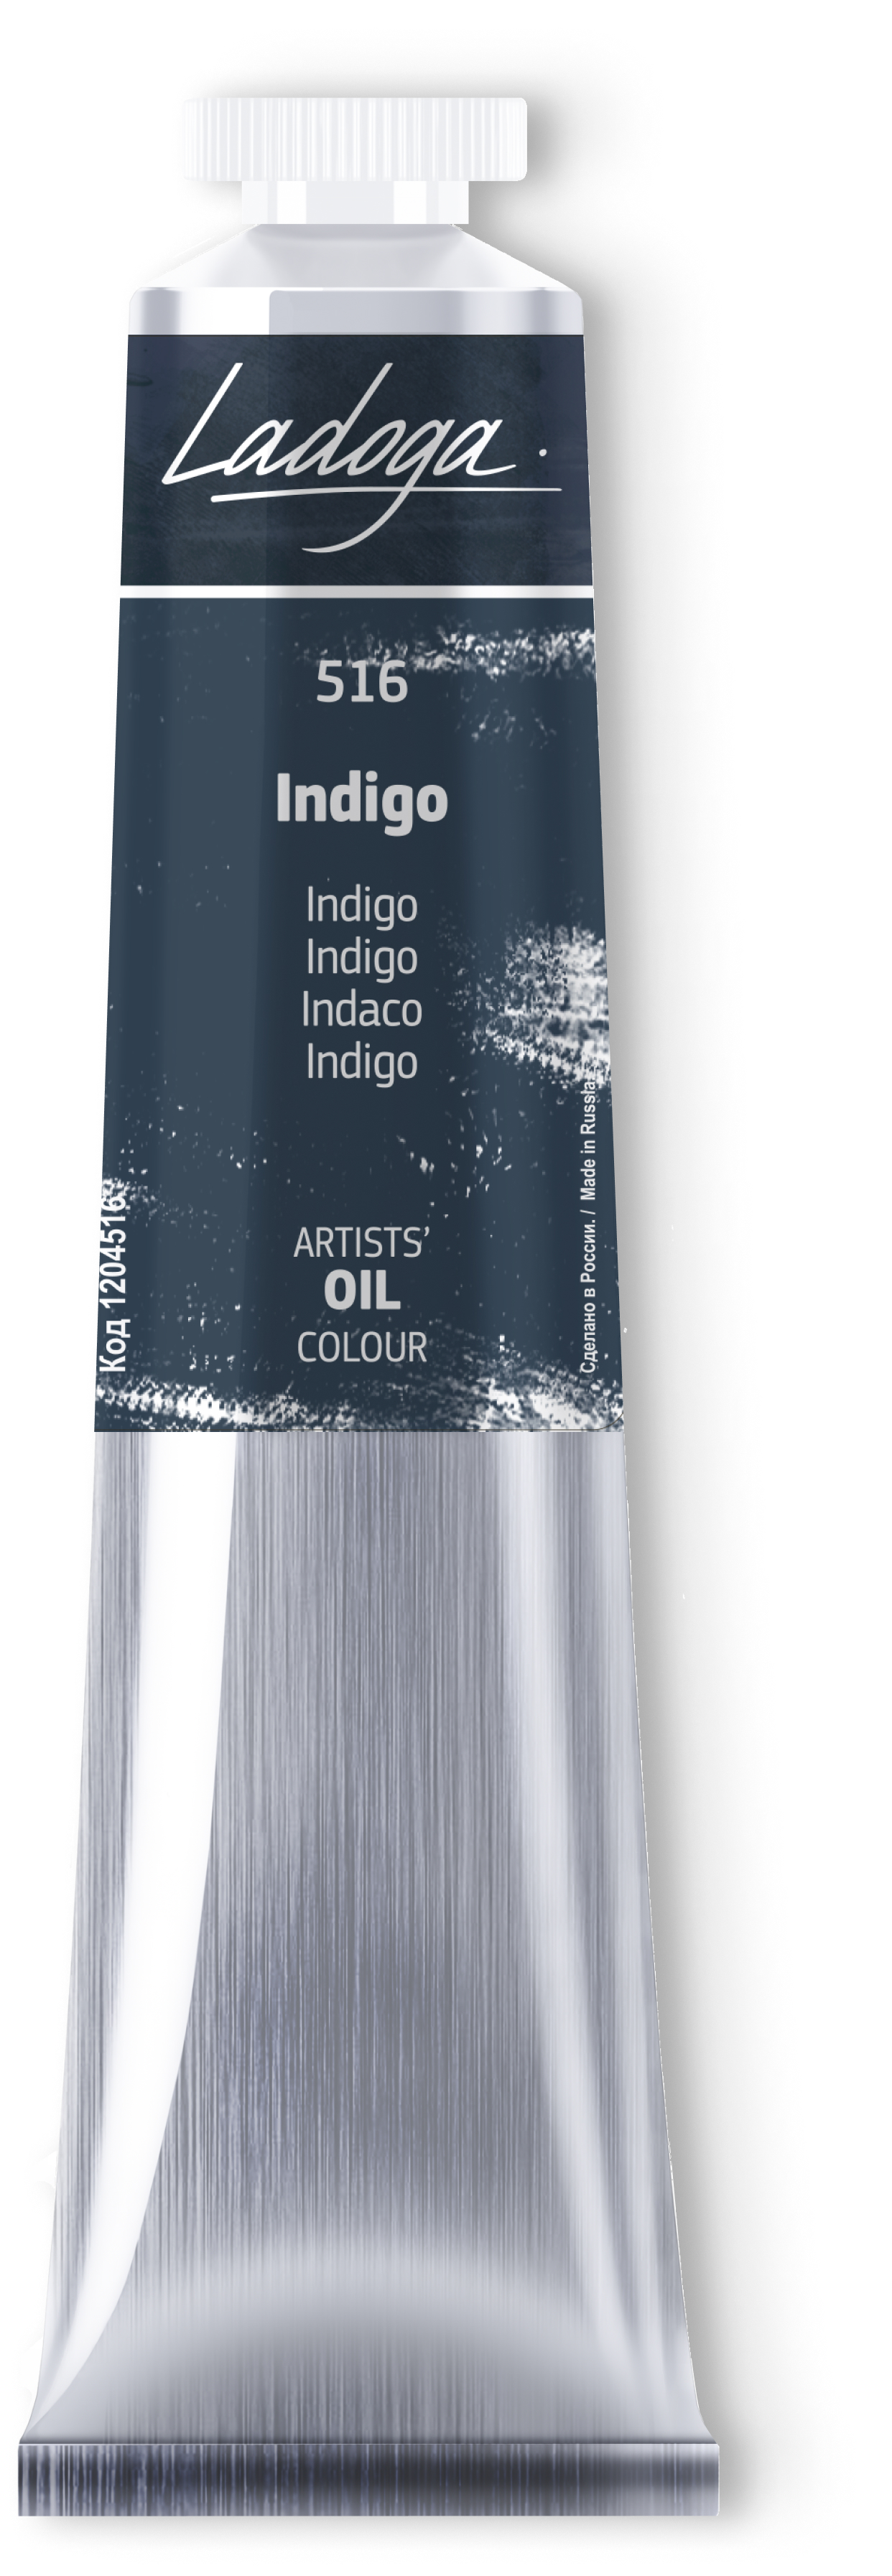 Oil colour "Ladoga", Indigo, tube, № 516